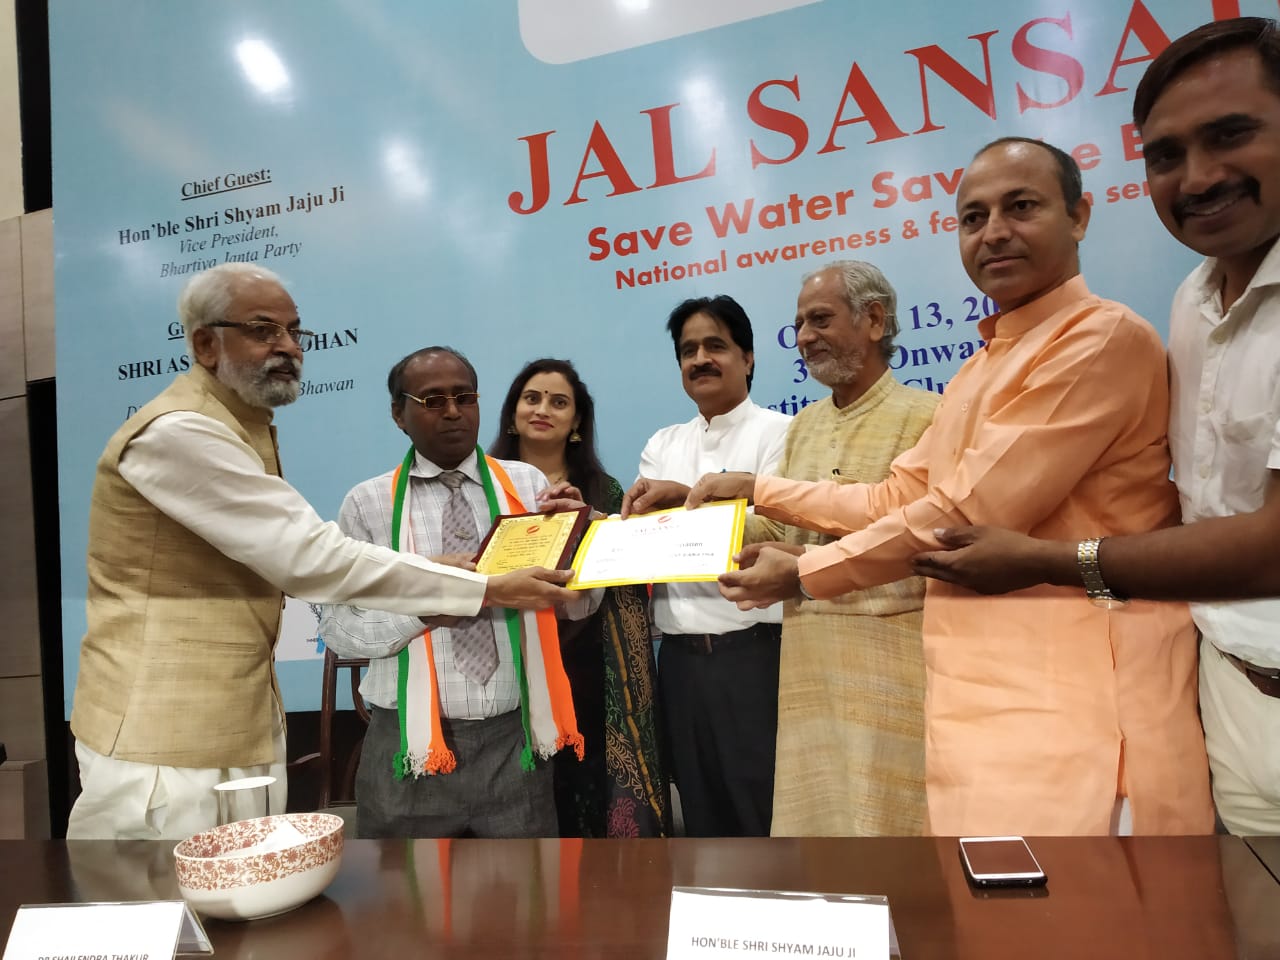 गोपाल किरन समाज सेवी संस्था को दिल्ली में मिला सजग जल प्रहरी सम्मान | New India Times